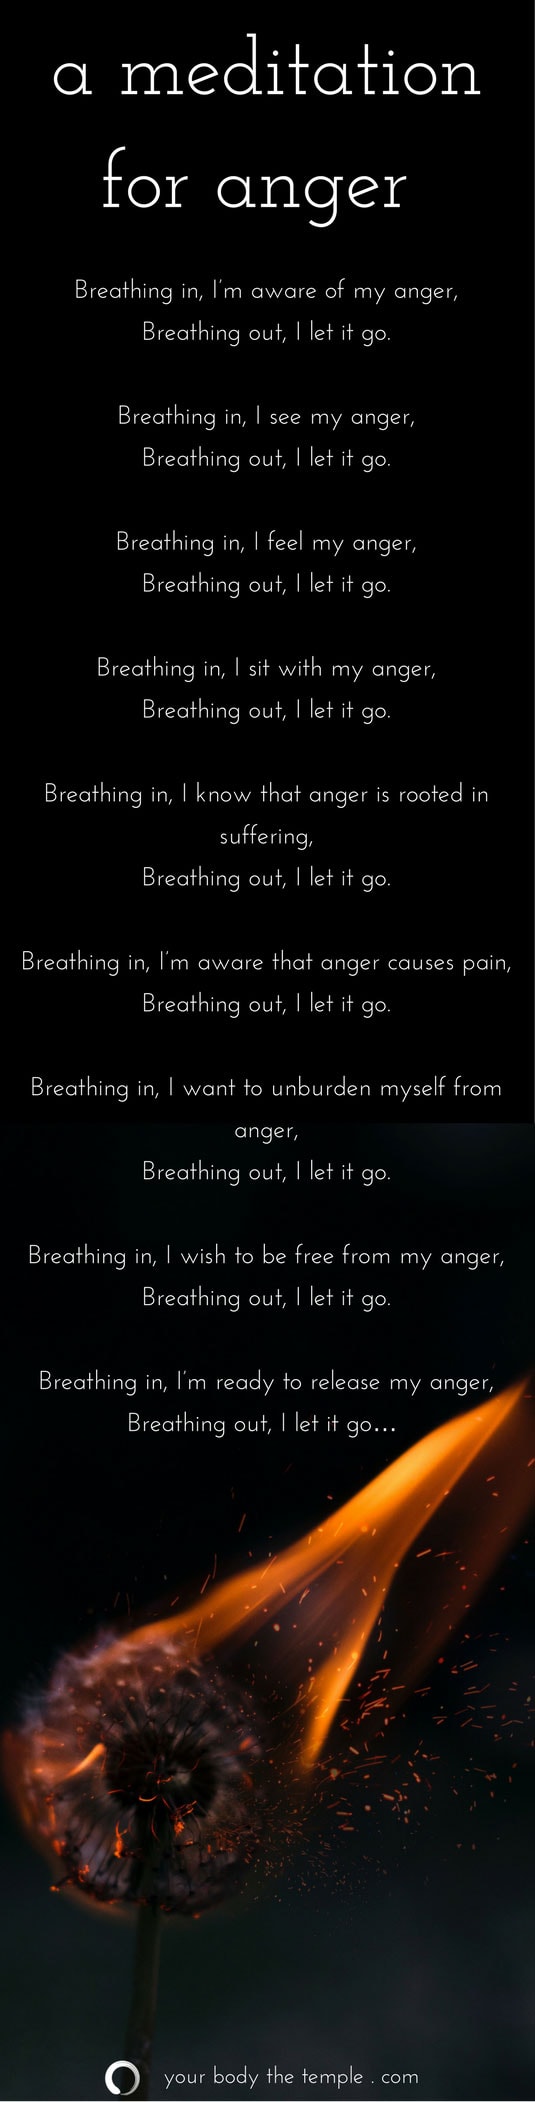 meditation for anger